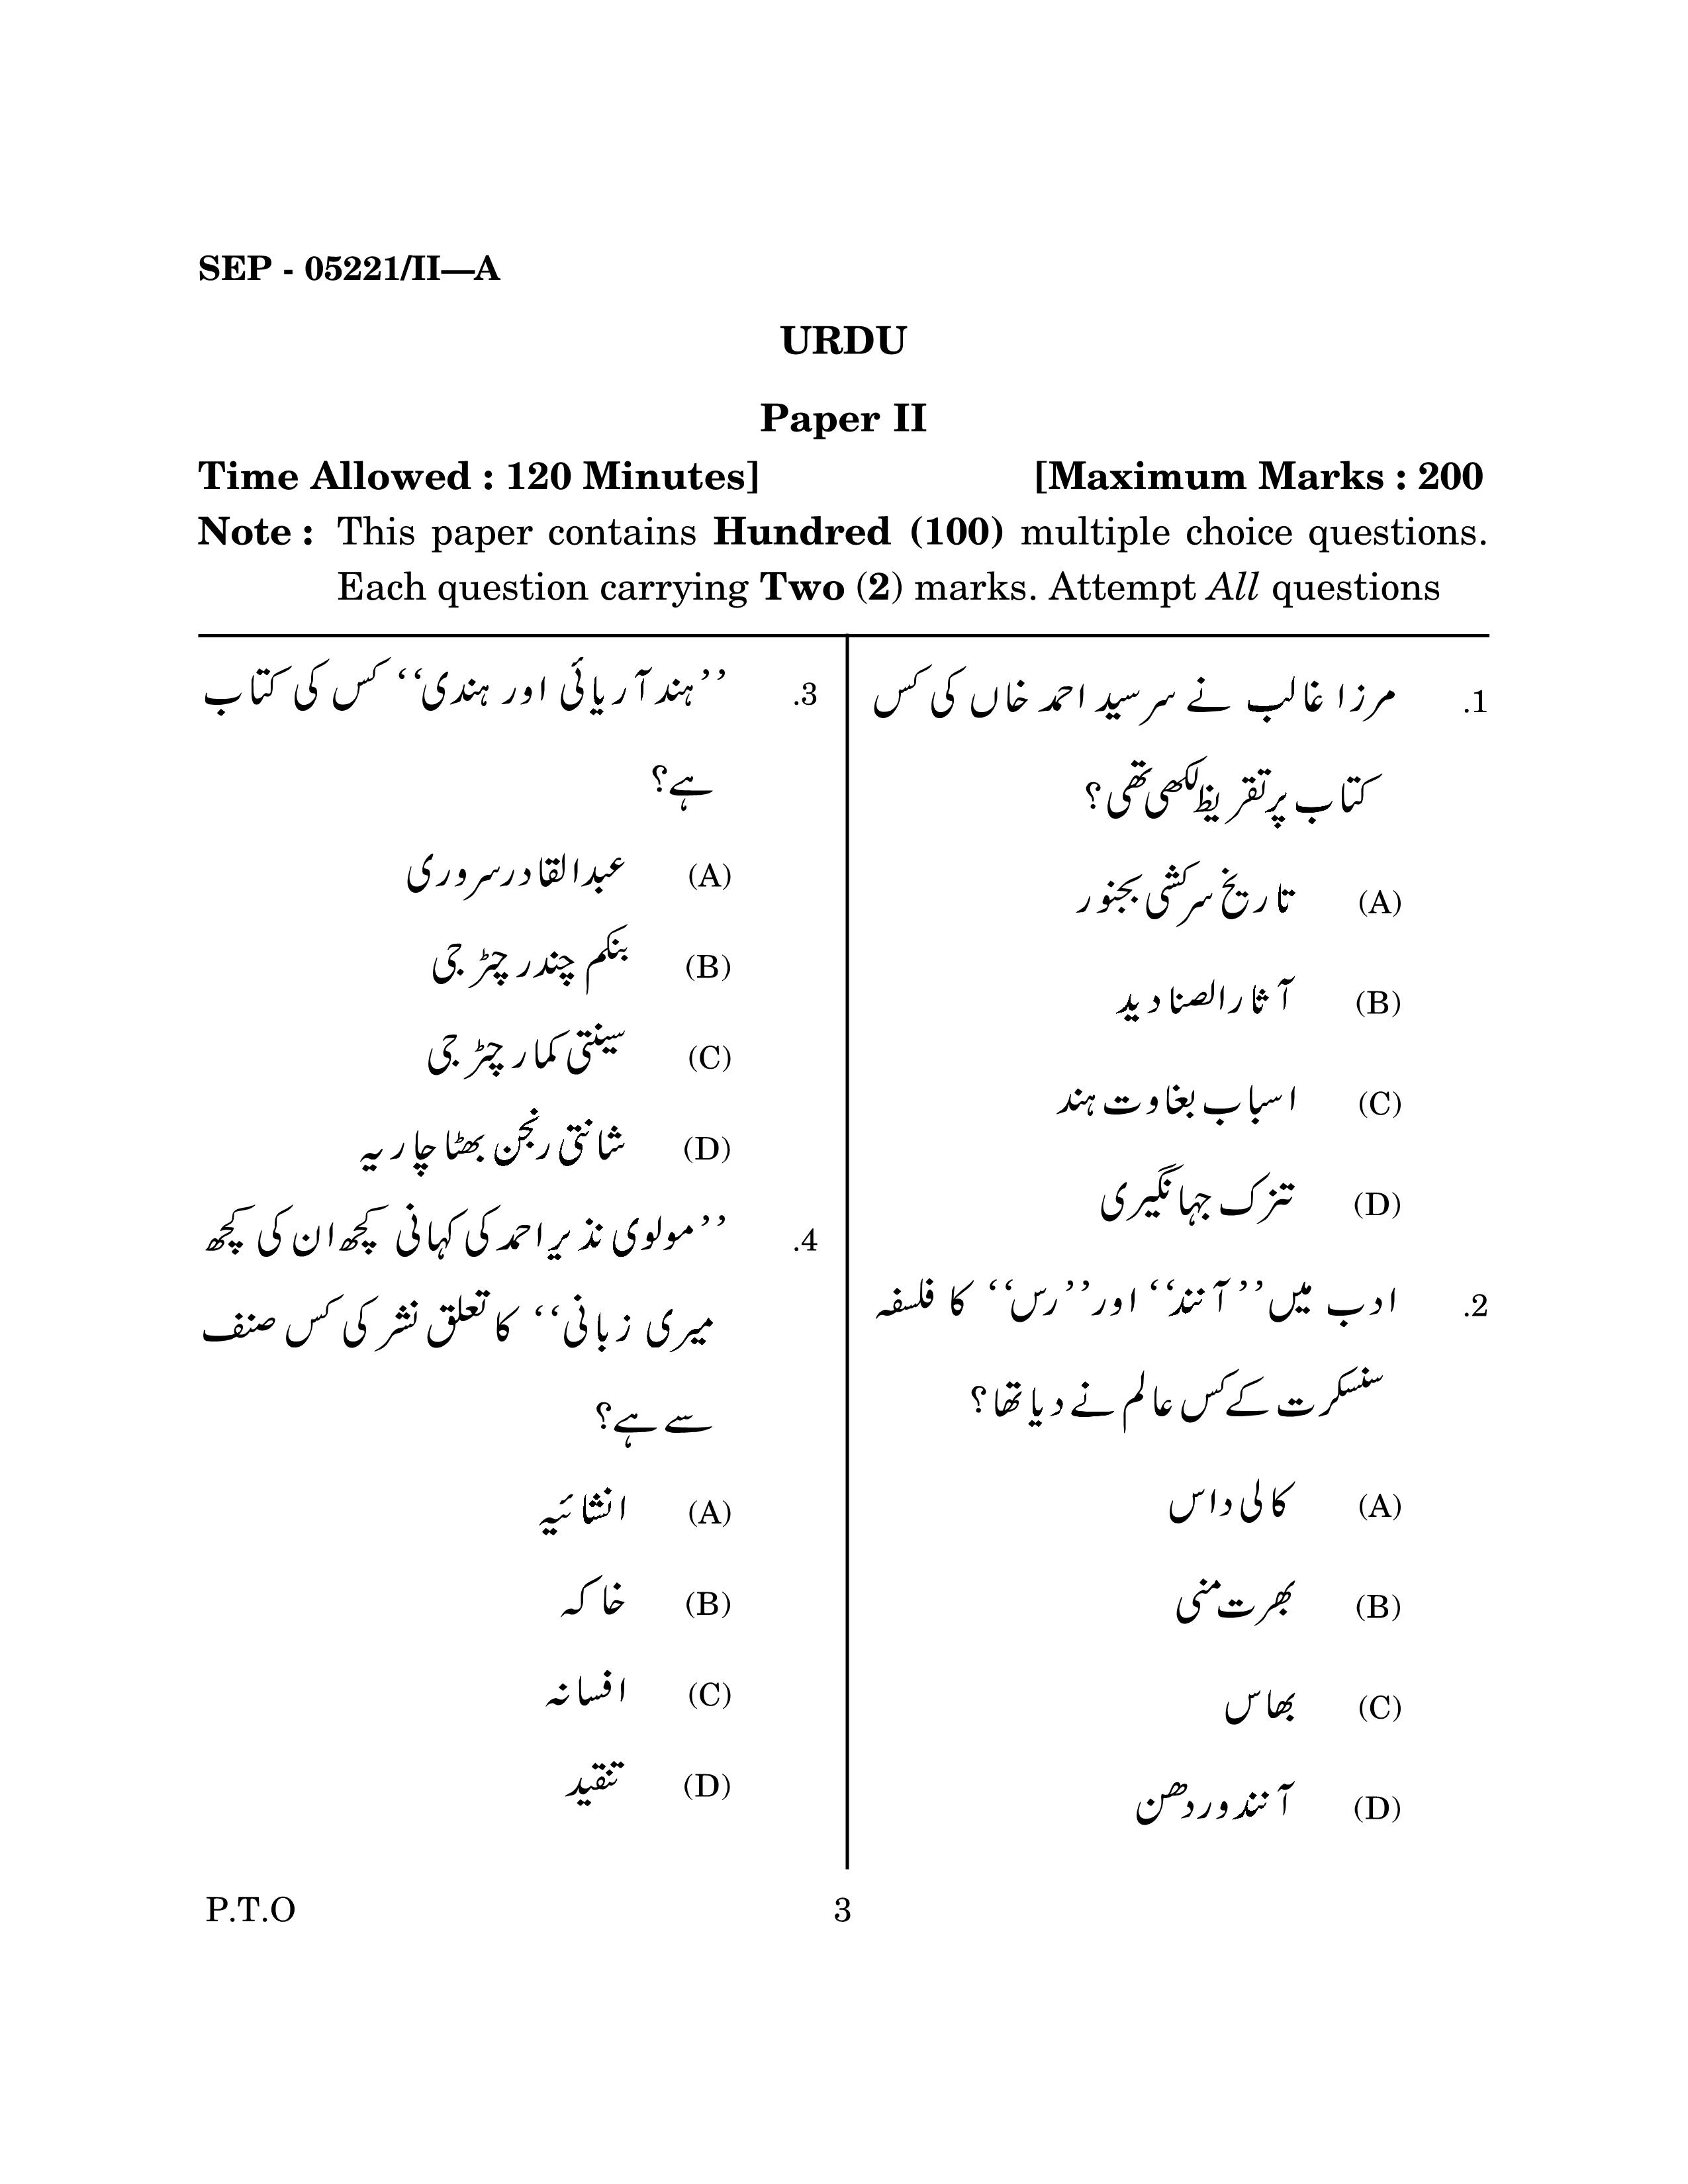 Maharashtra SET Urdu Exam Question Paper September 2021 2